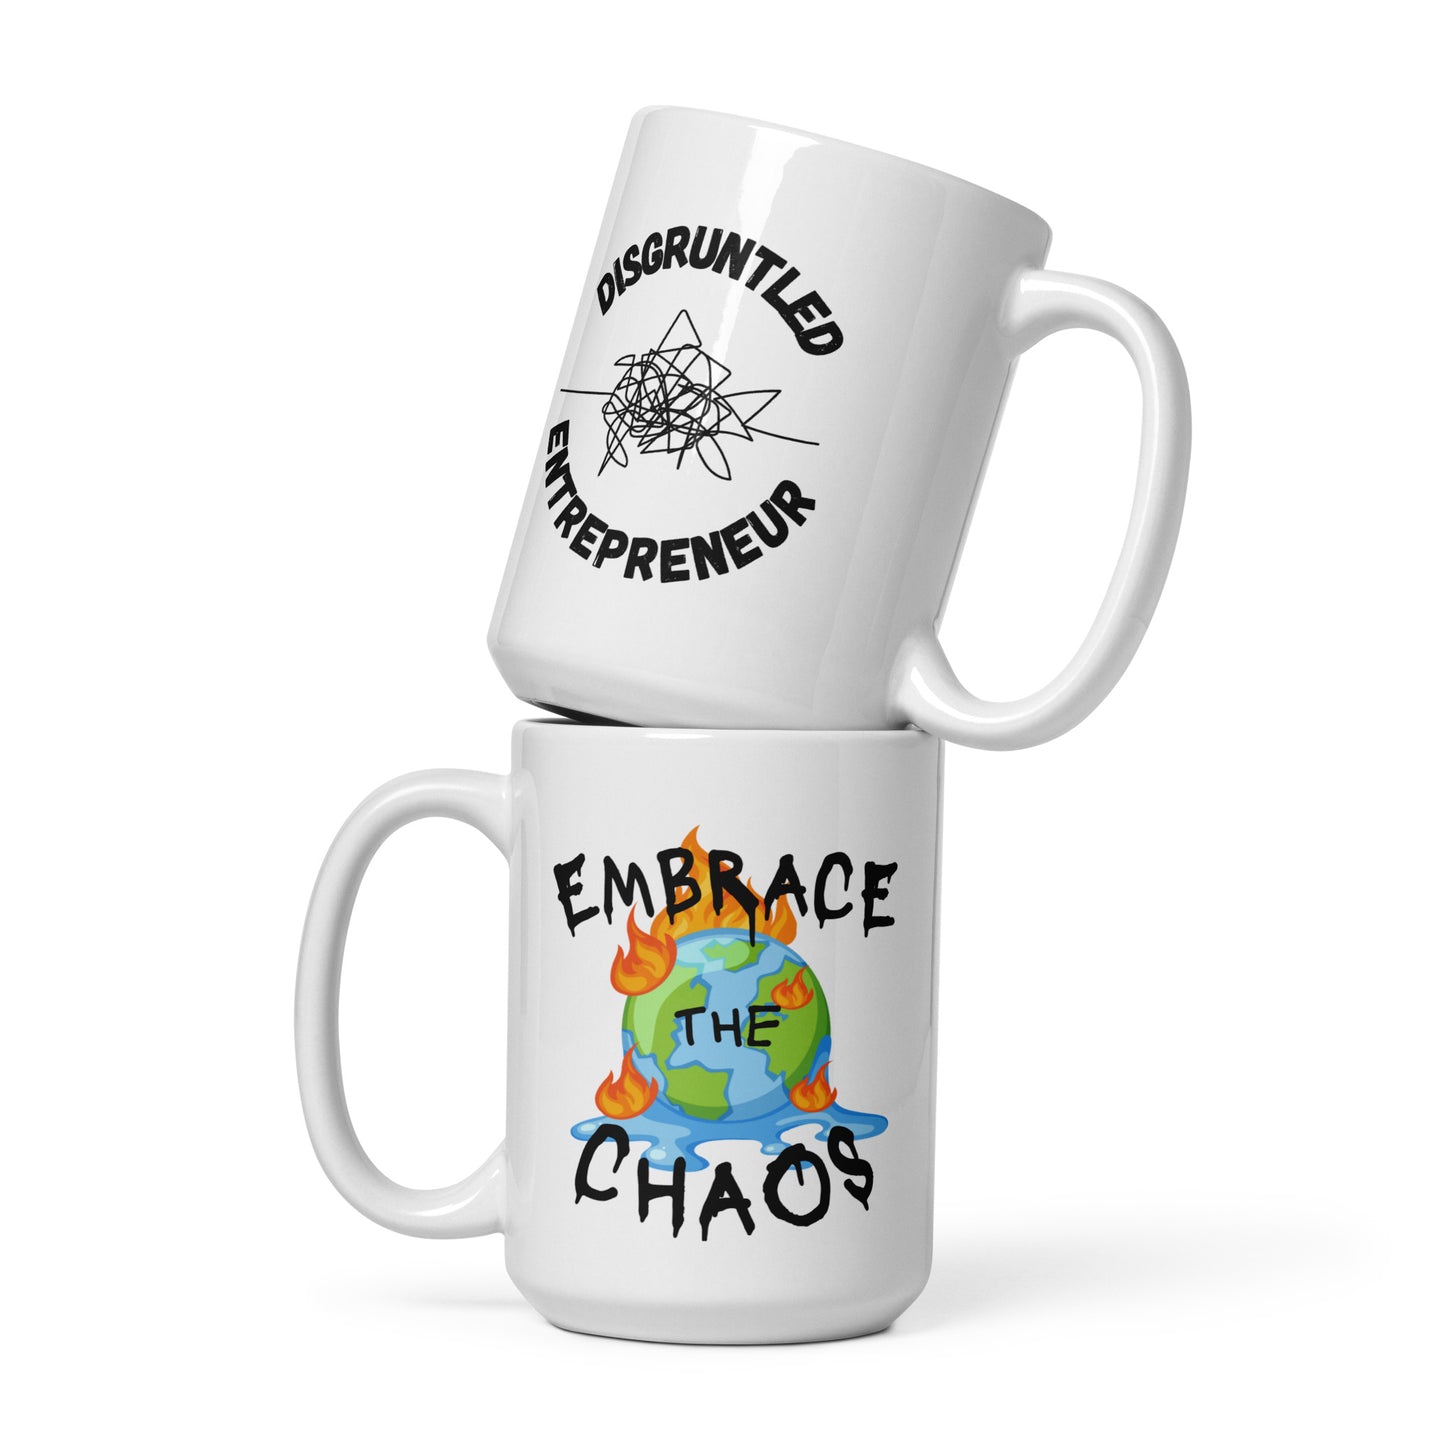 Embrace the Chaos Coffee Mug for Entrepreneurs